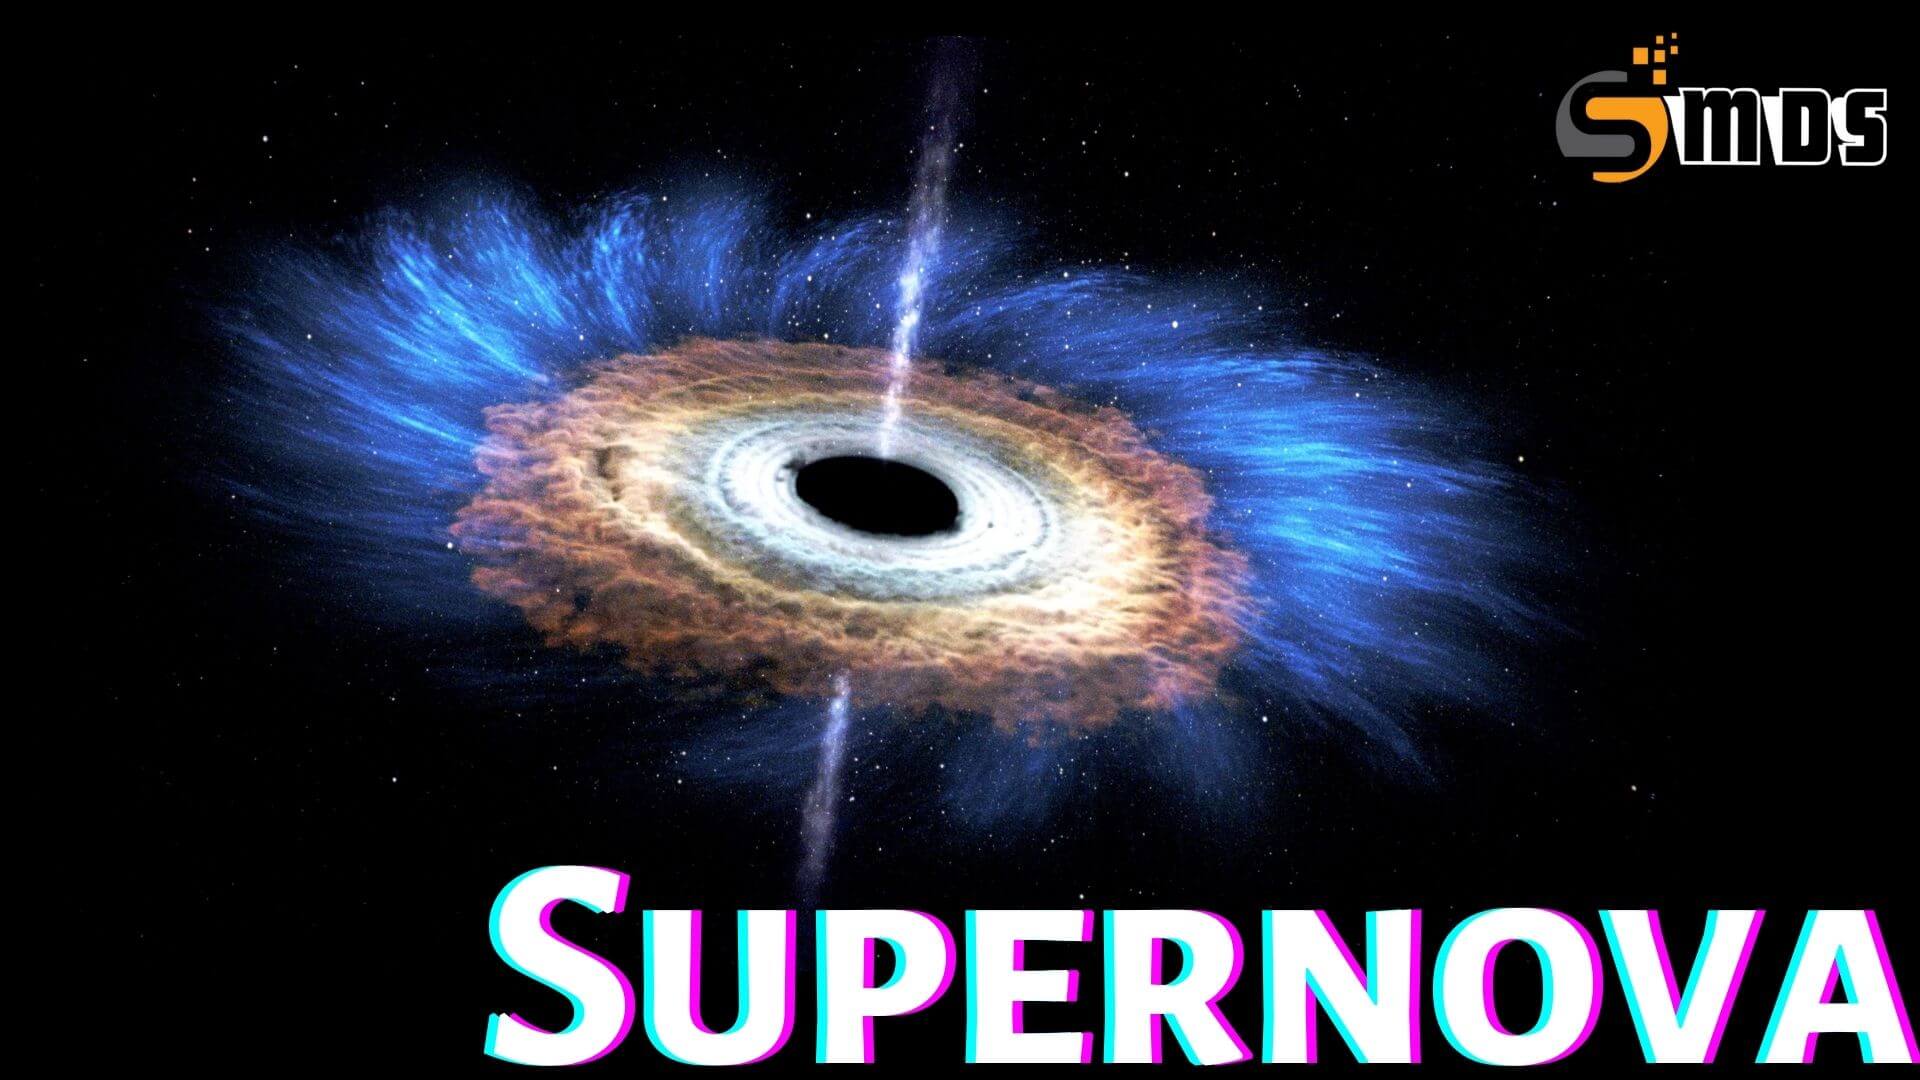 Supernova in Hindi